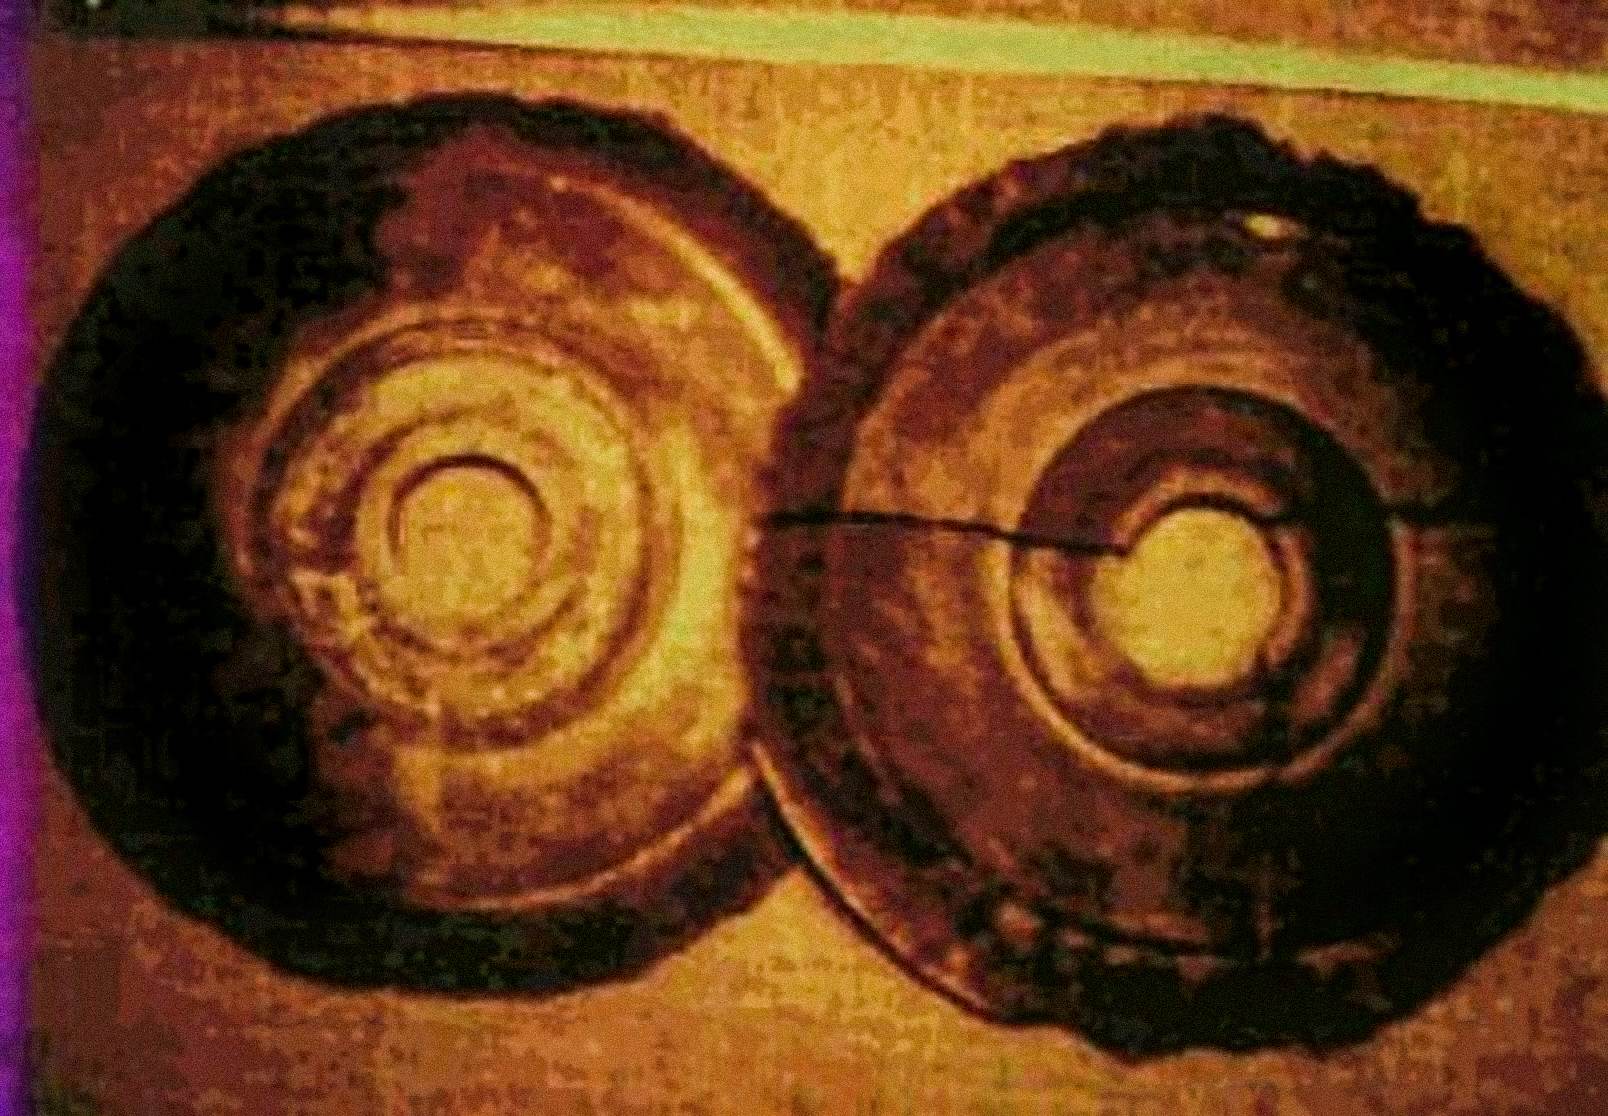 Pada tahun 1974, Ernst Wegerer, seorang insinyur Austria, memotret dua piringan yang sesuai dengan deskripsi Batu Dropa. Dia sedang dalam tur berpemandu ke Museum Banpo di Xian, ketika dia melihat cakram batu dipajang. Dia mengklaim dia melihat lubang di tengah setiap cakram dan hieroglif di sebagian alur seperti spiral yang hancur.